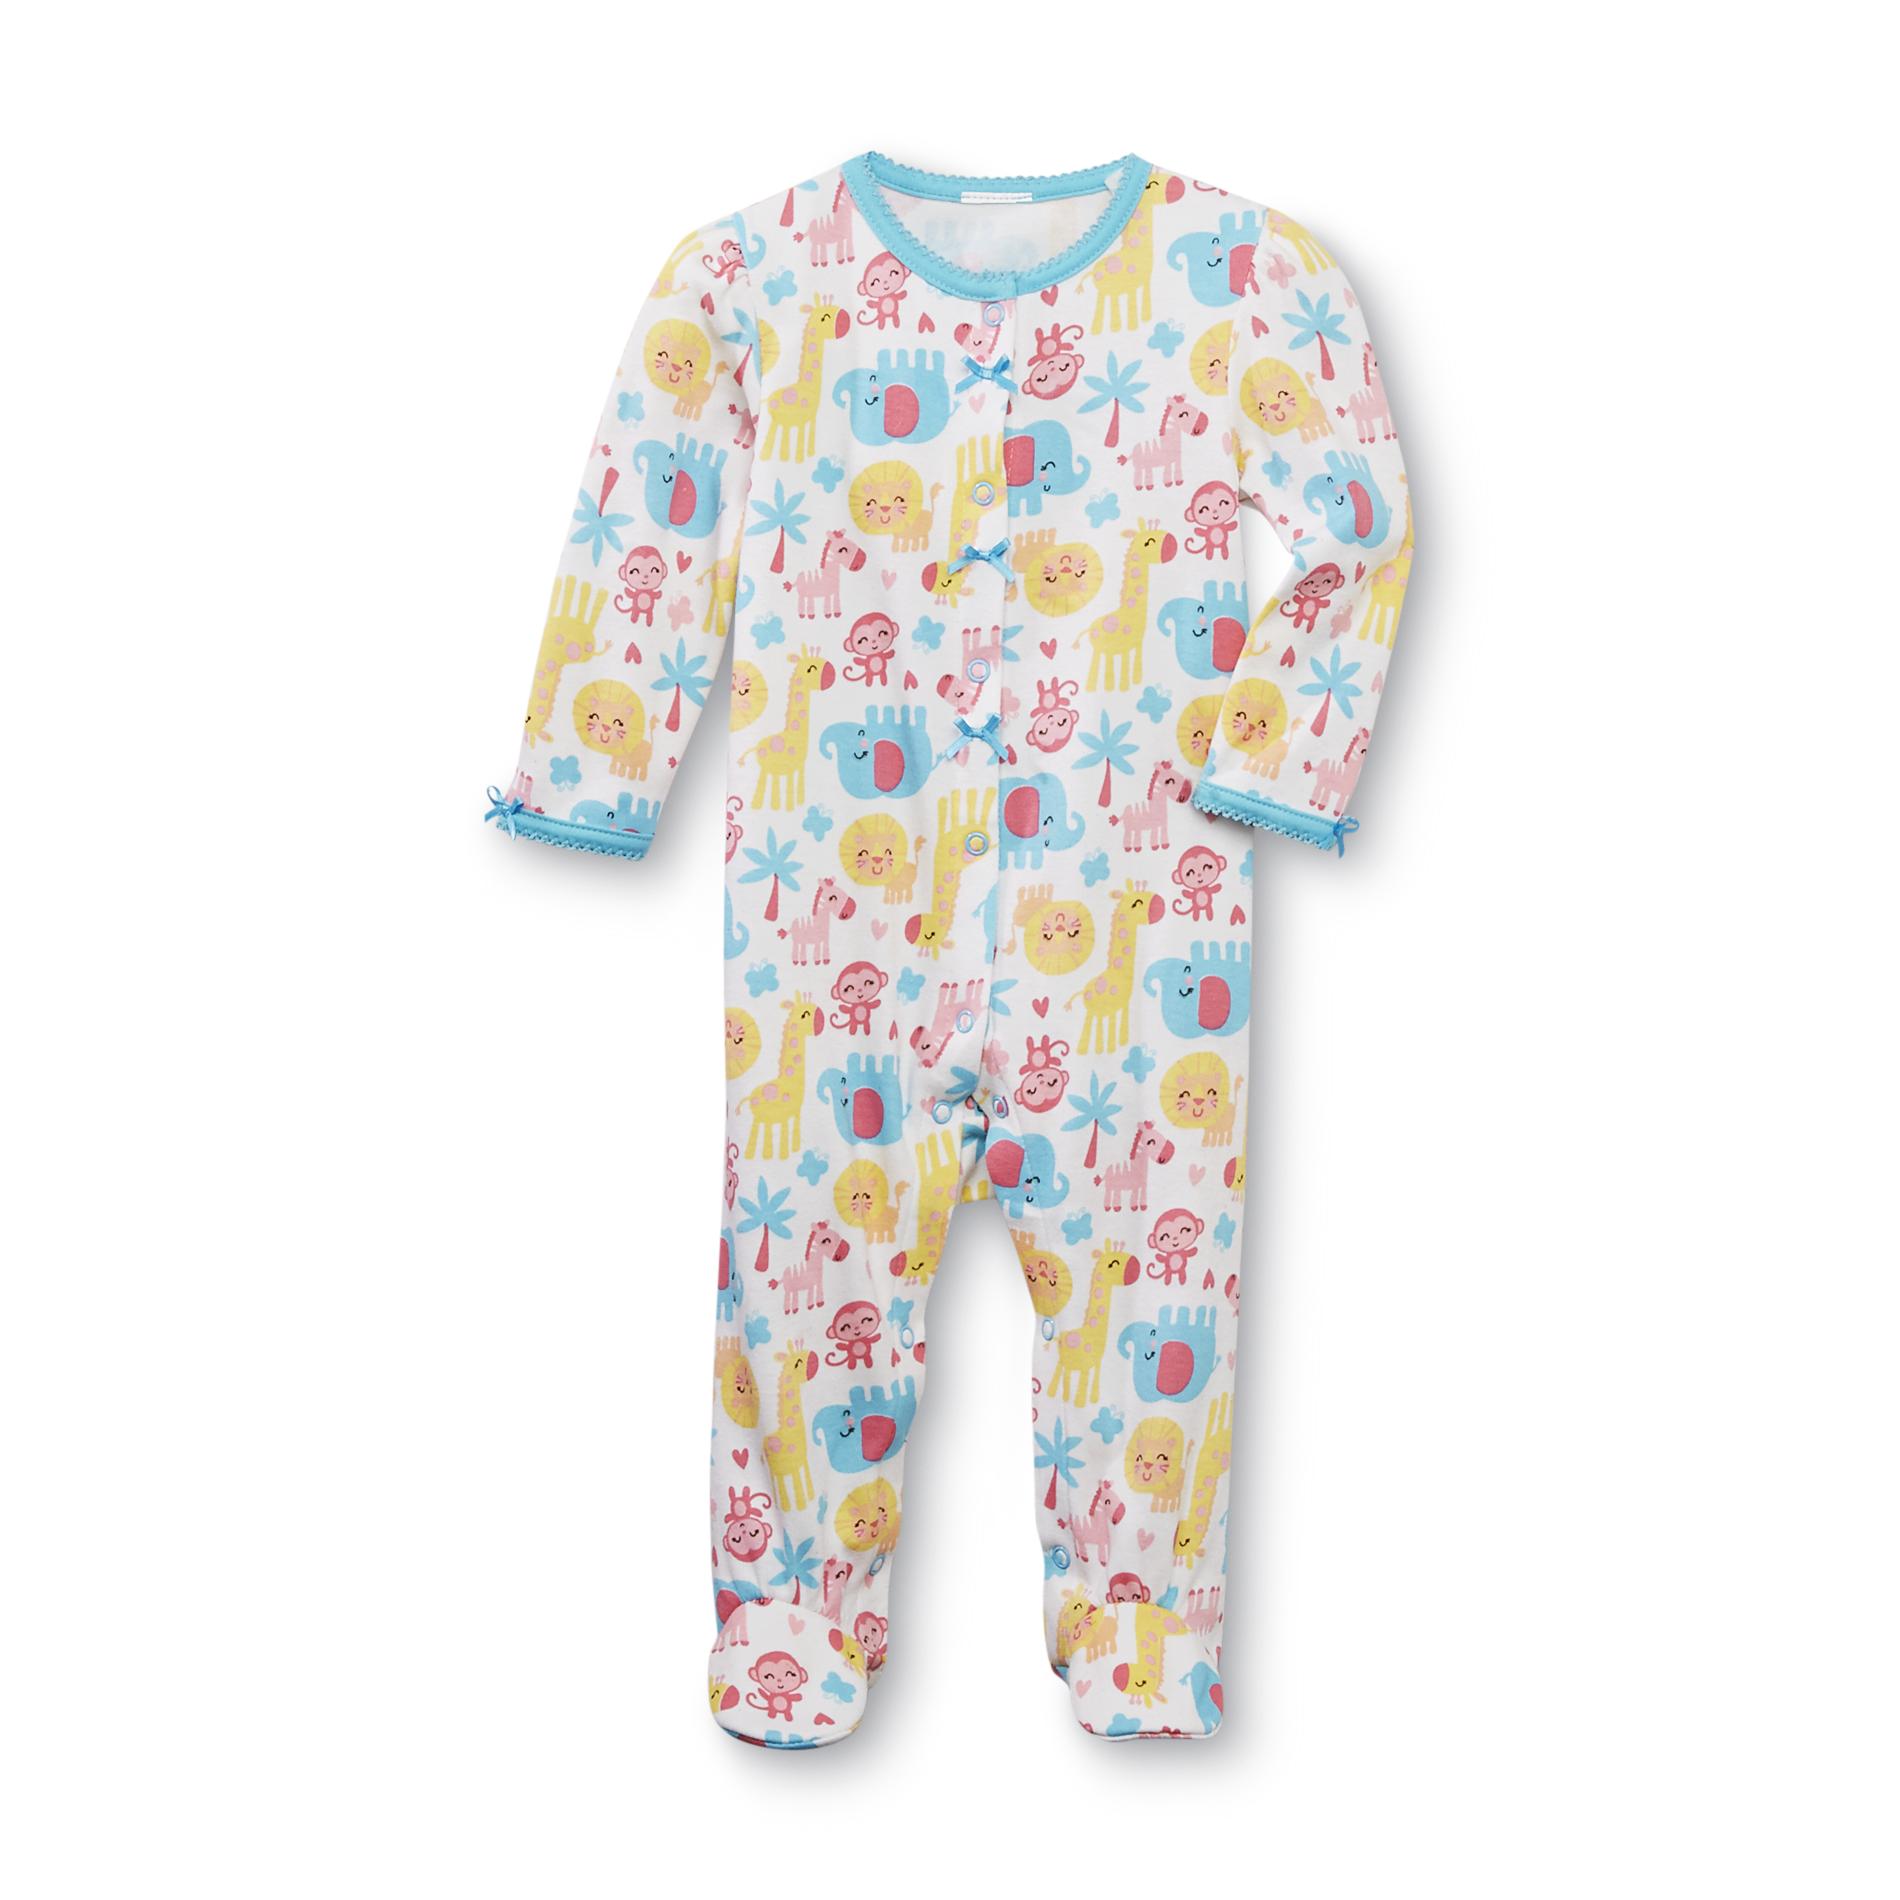 Small Wonders Newborn Girl's Sleeper Pajamas - Jungle